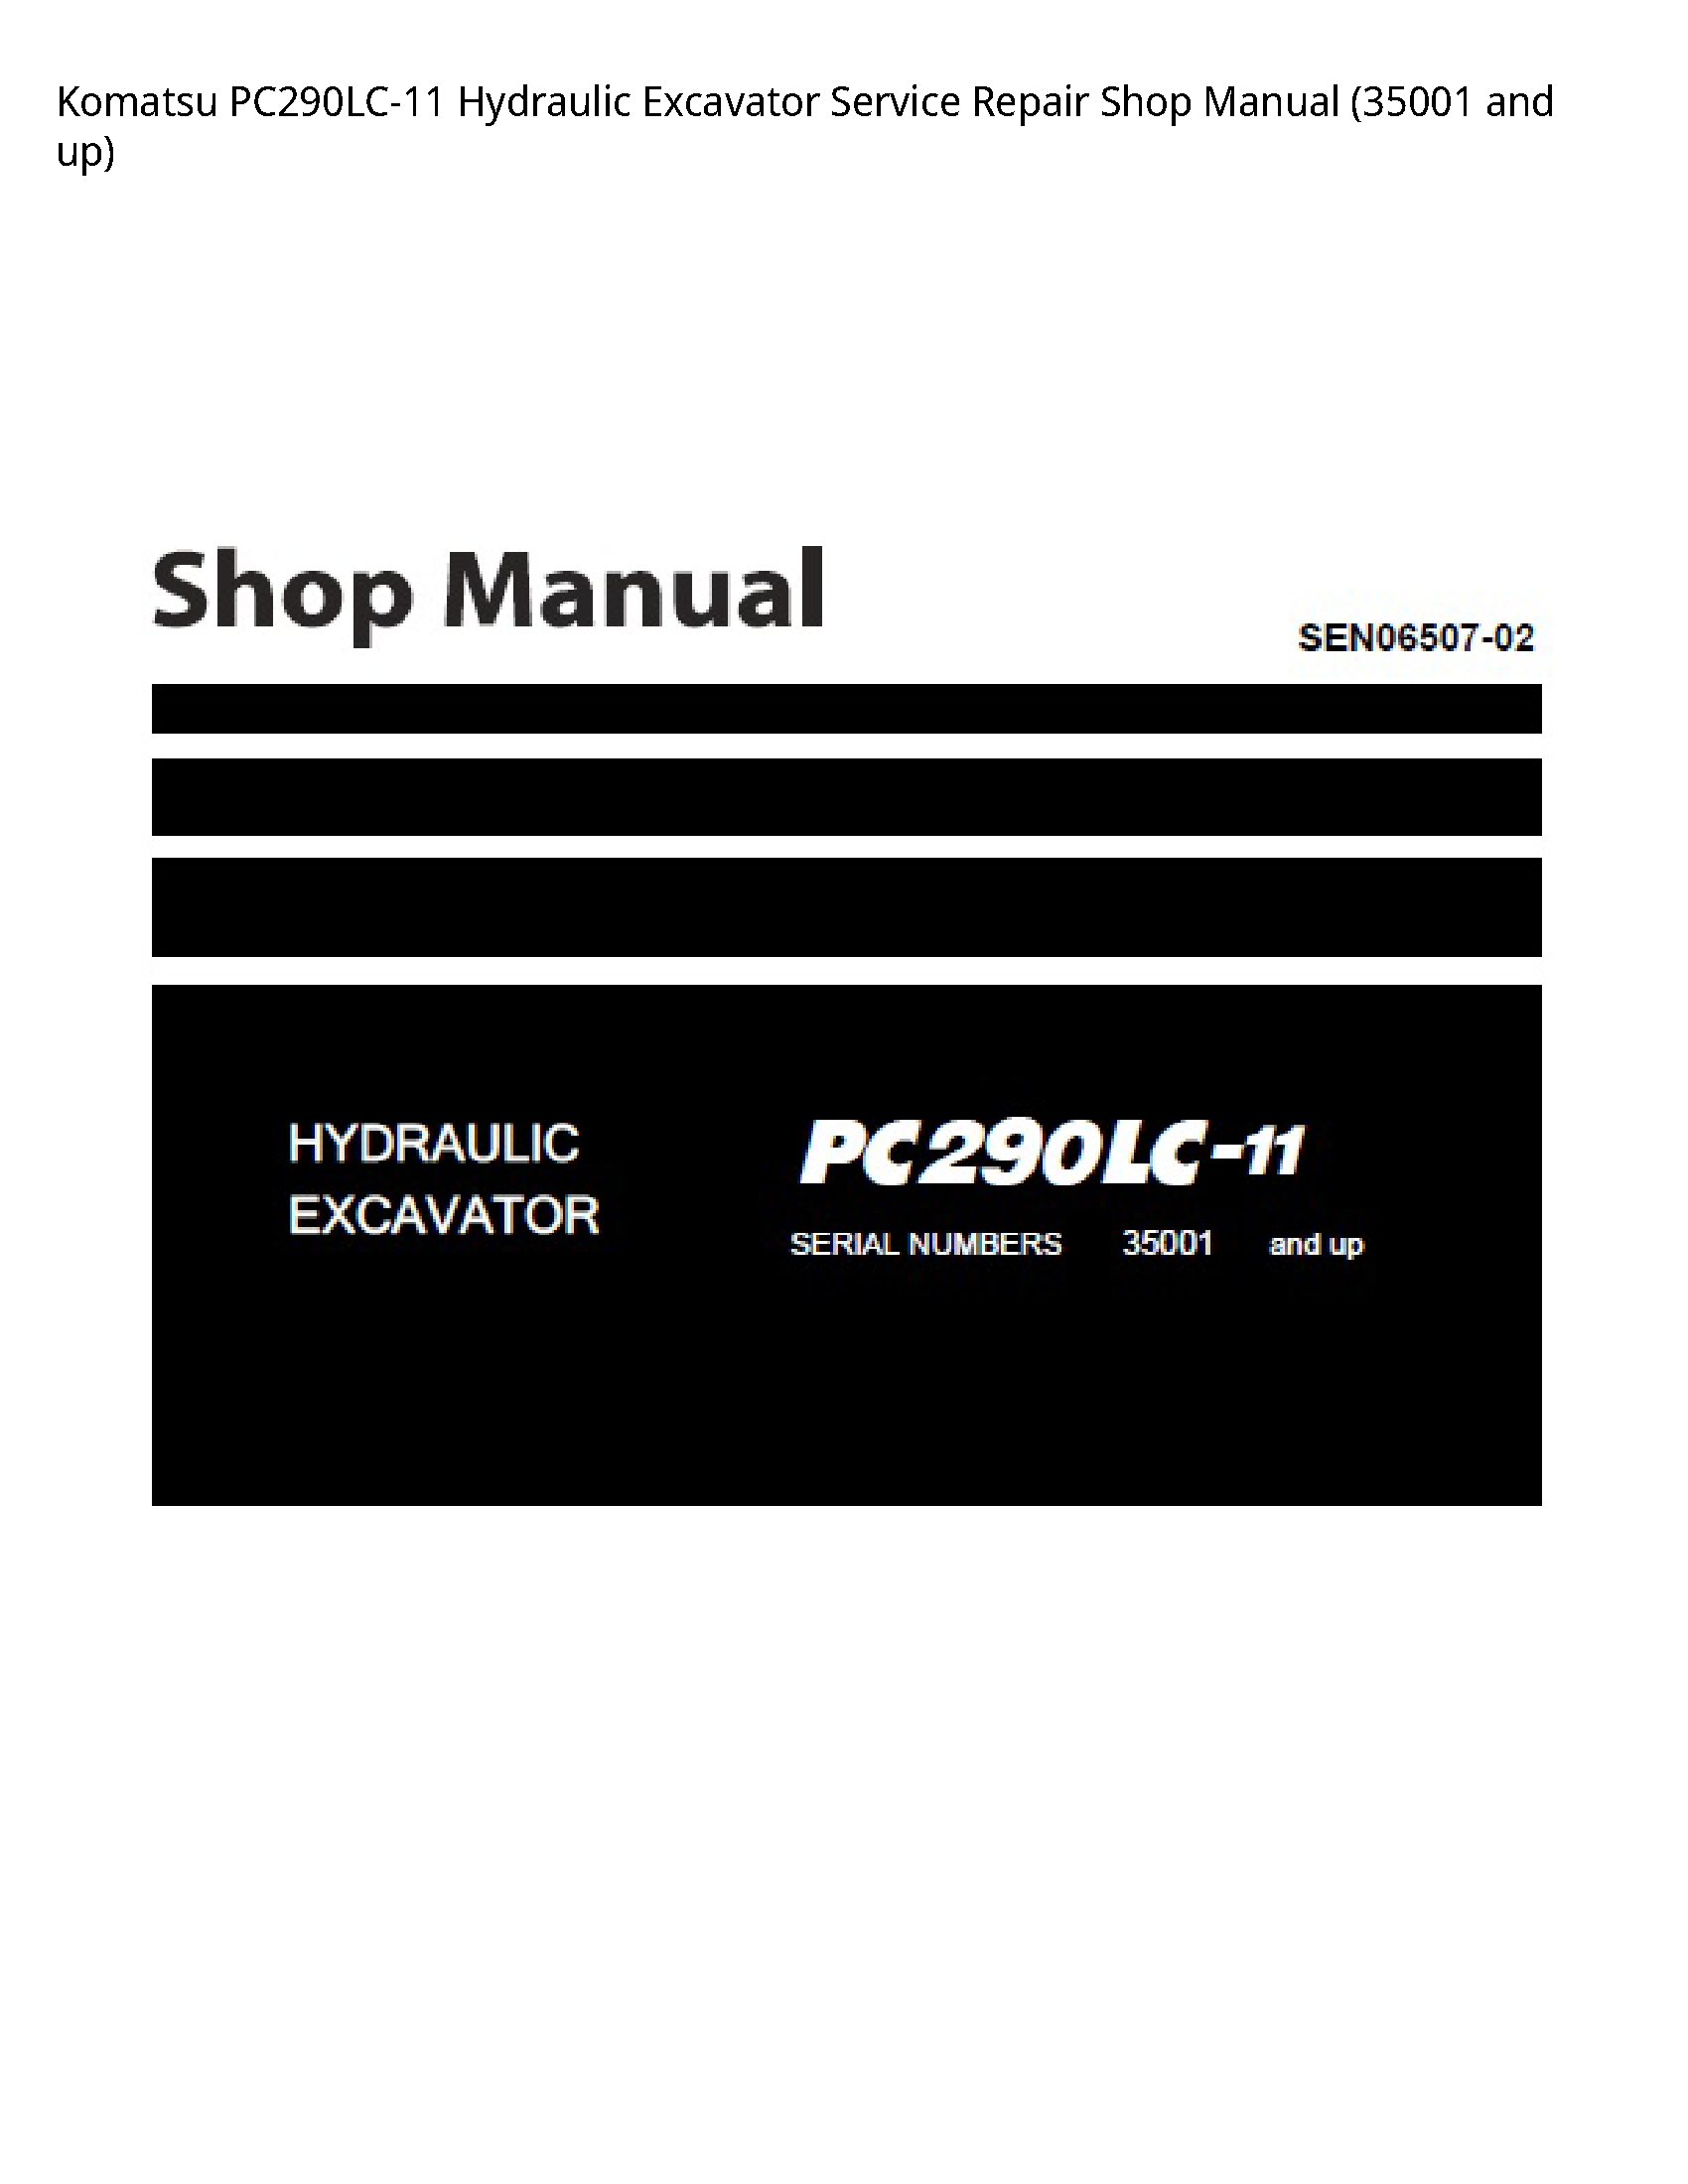 KOMATSU PC290LC-11 Hydraulic Excavator manual